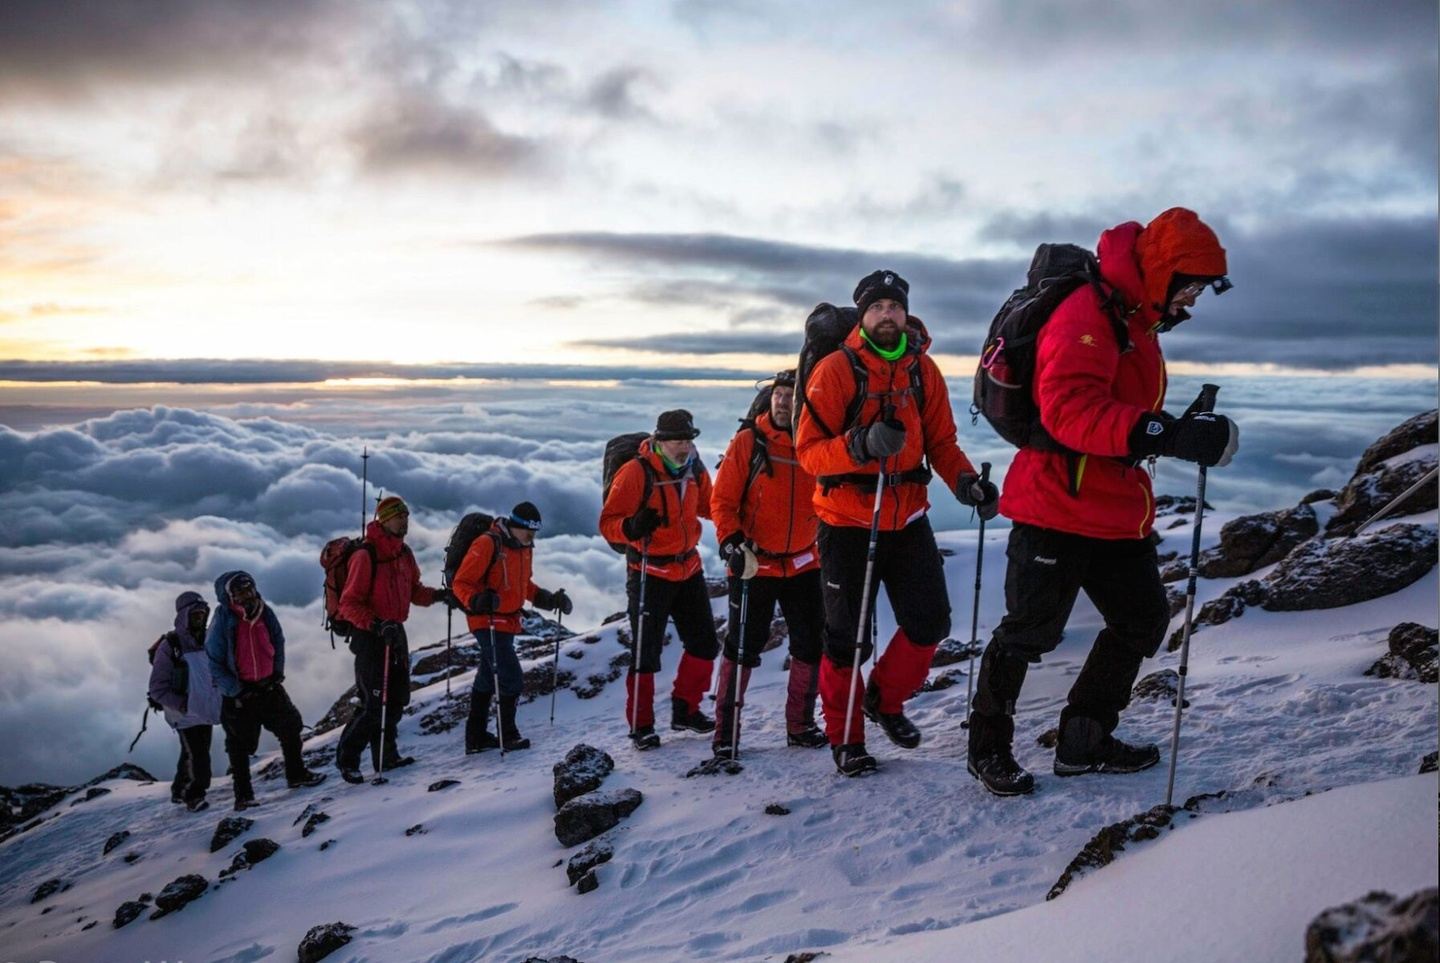 Kilimanjaro climb via Machame route 7 days